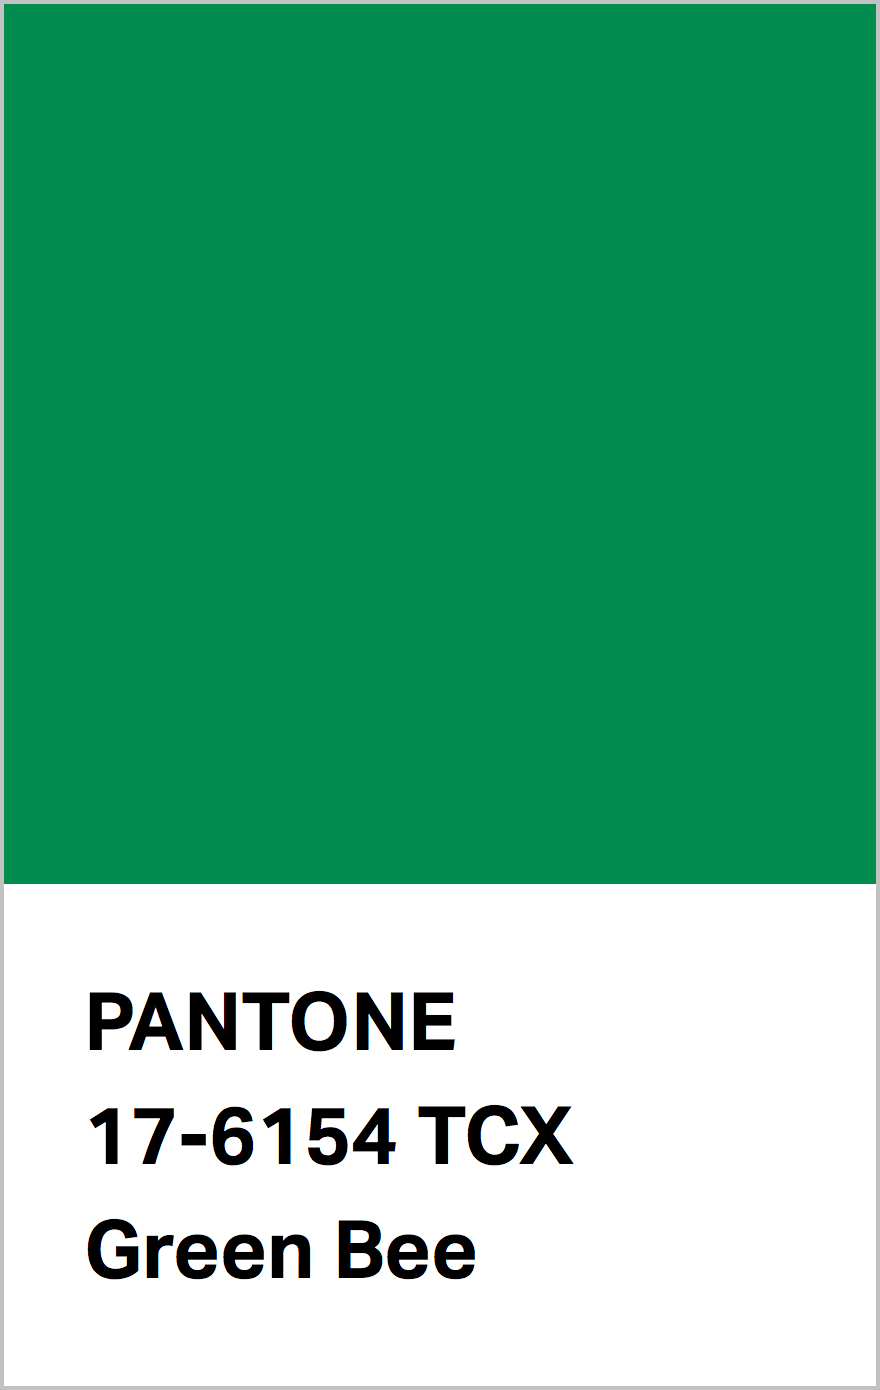 PANTONE® USA  New York Fashion Week Autumn/Winter 2021/2022